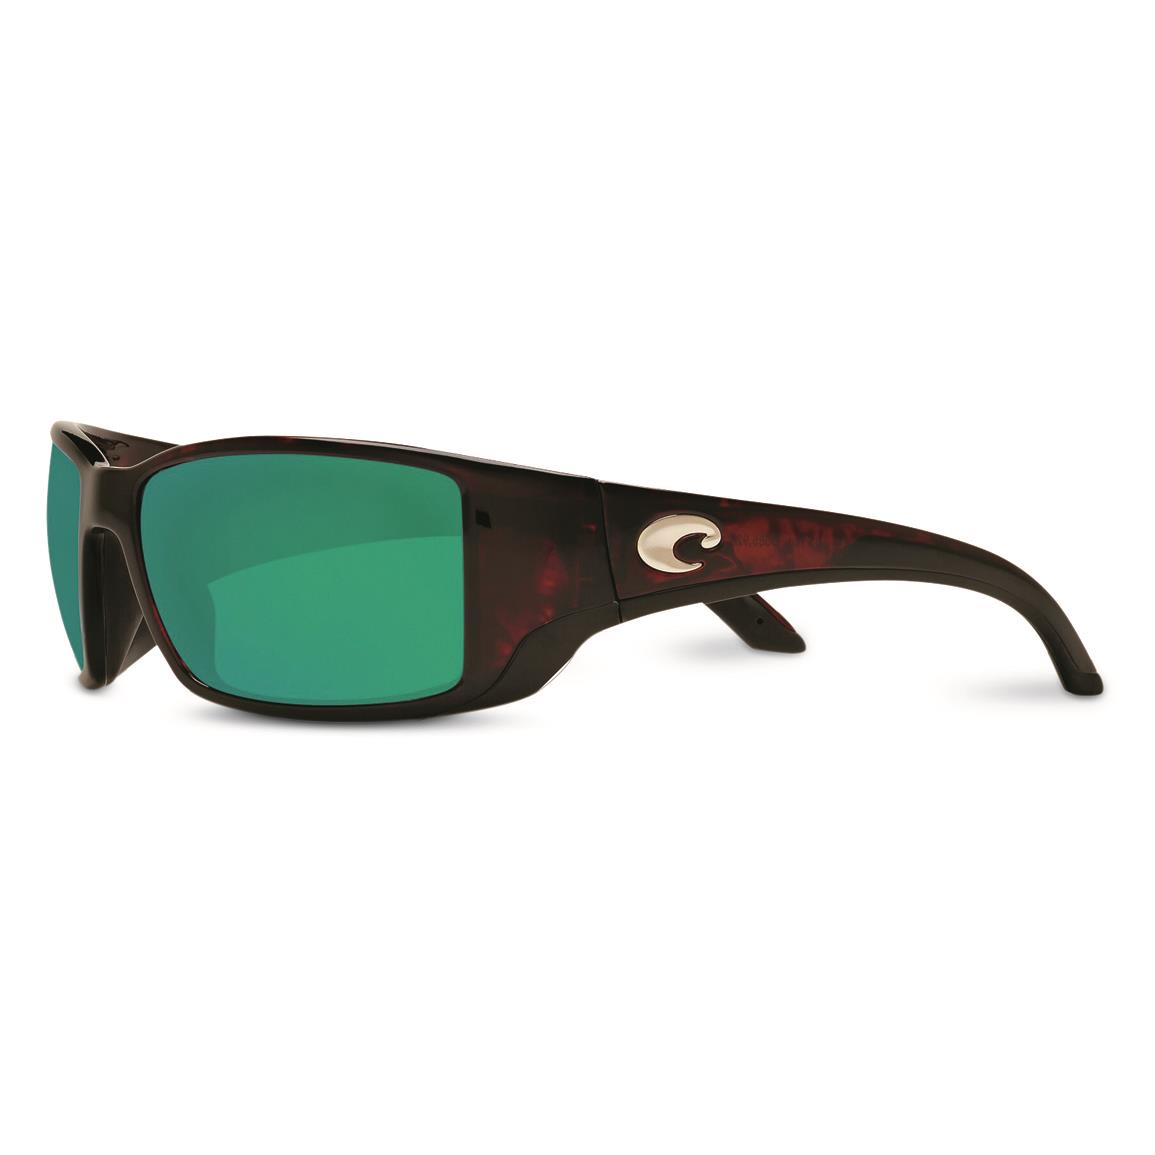 Huk Men's Clinch Polarized Sunglasses - 715445, Sunglasses